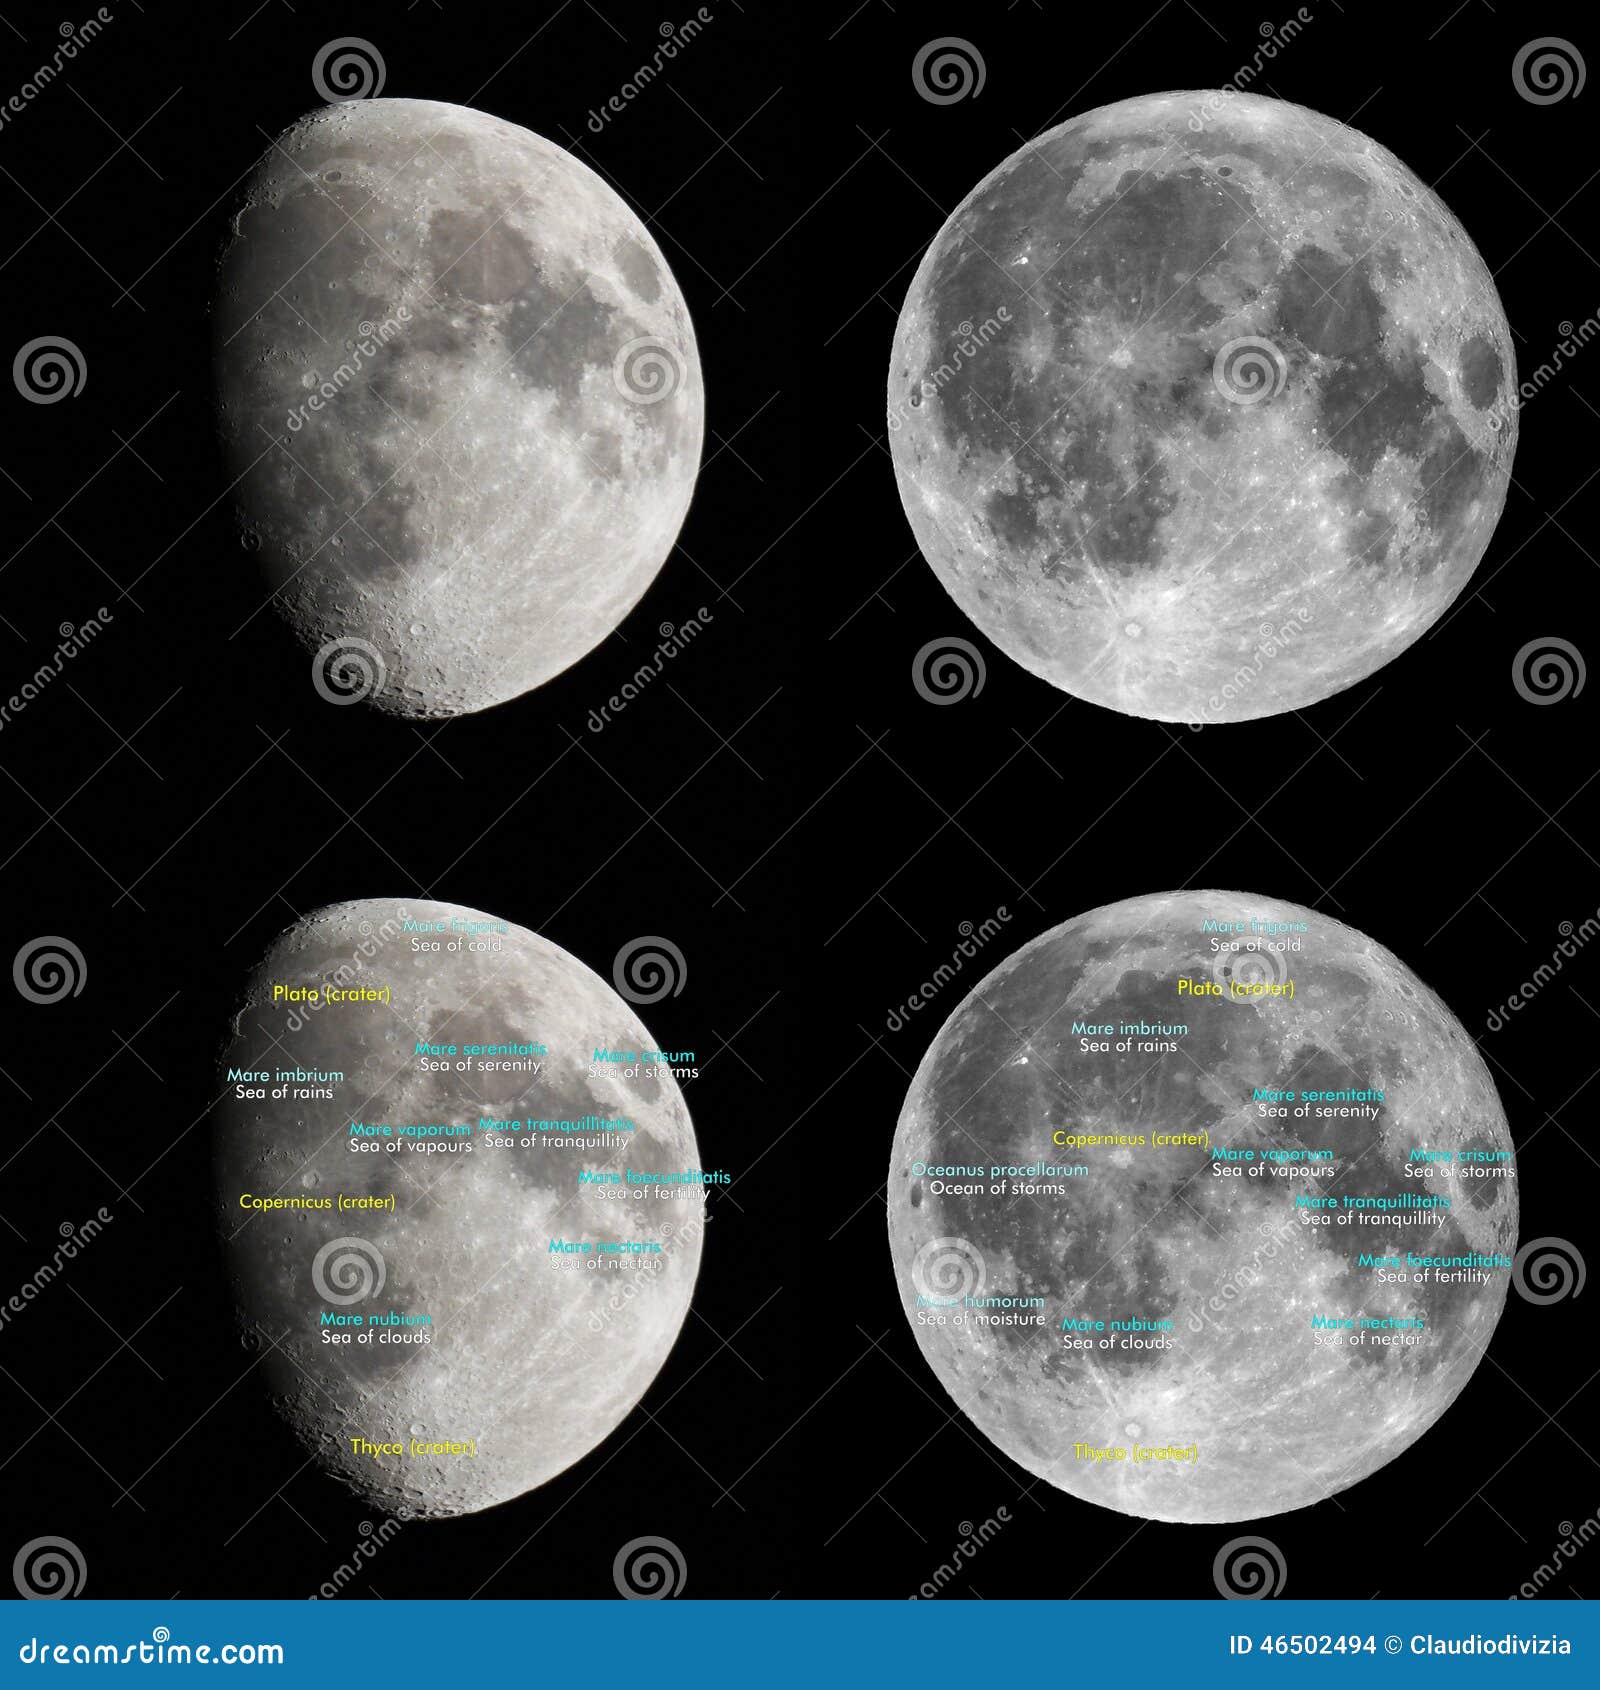 21st moon atlas